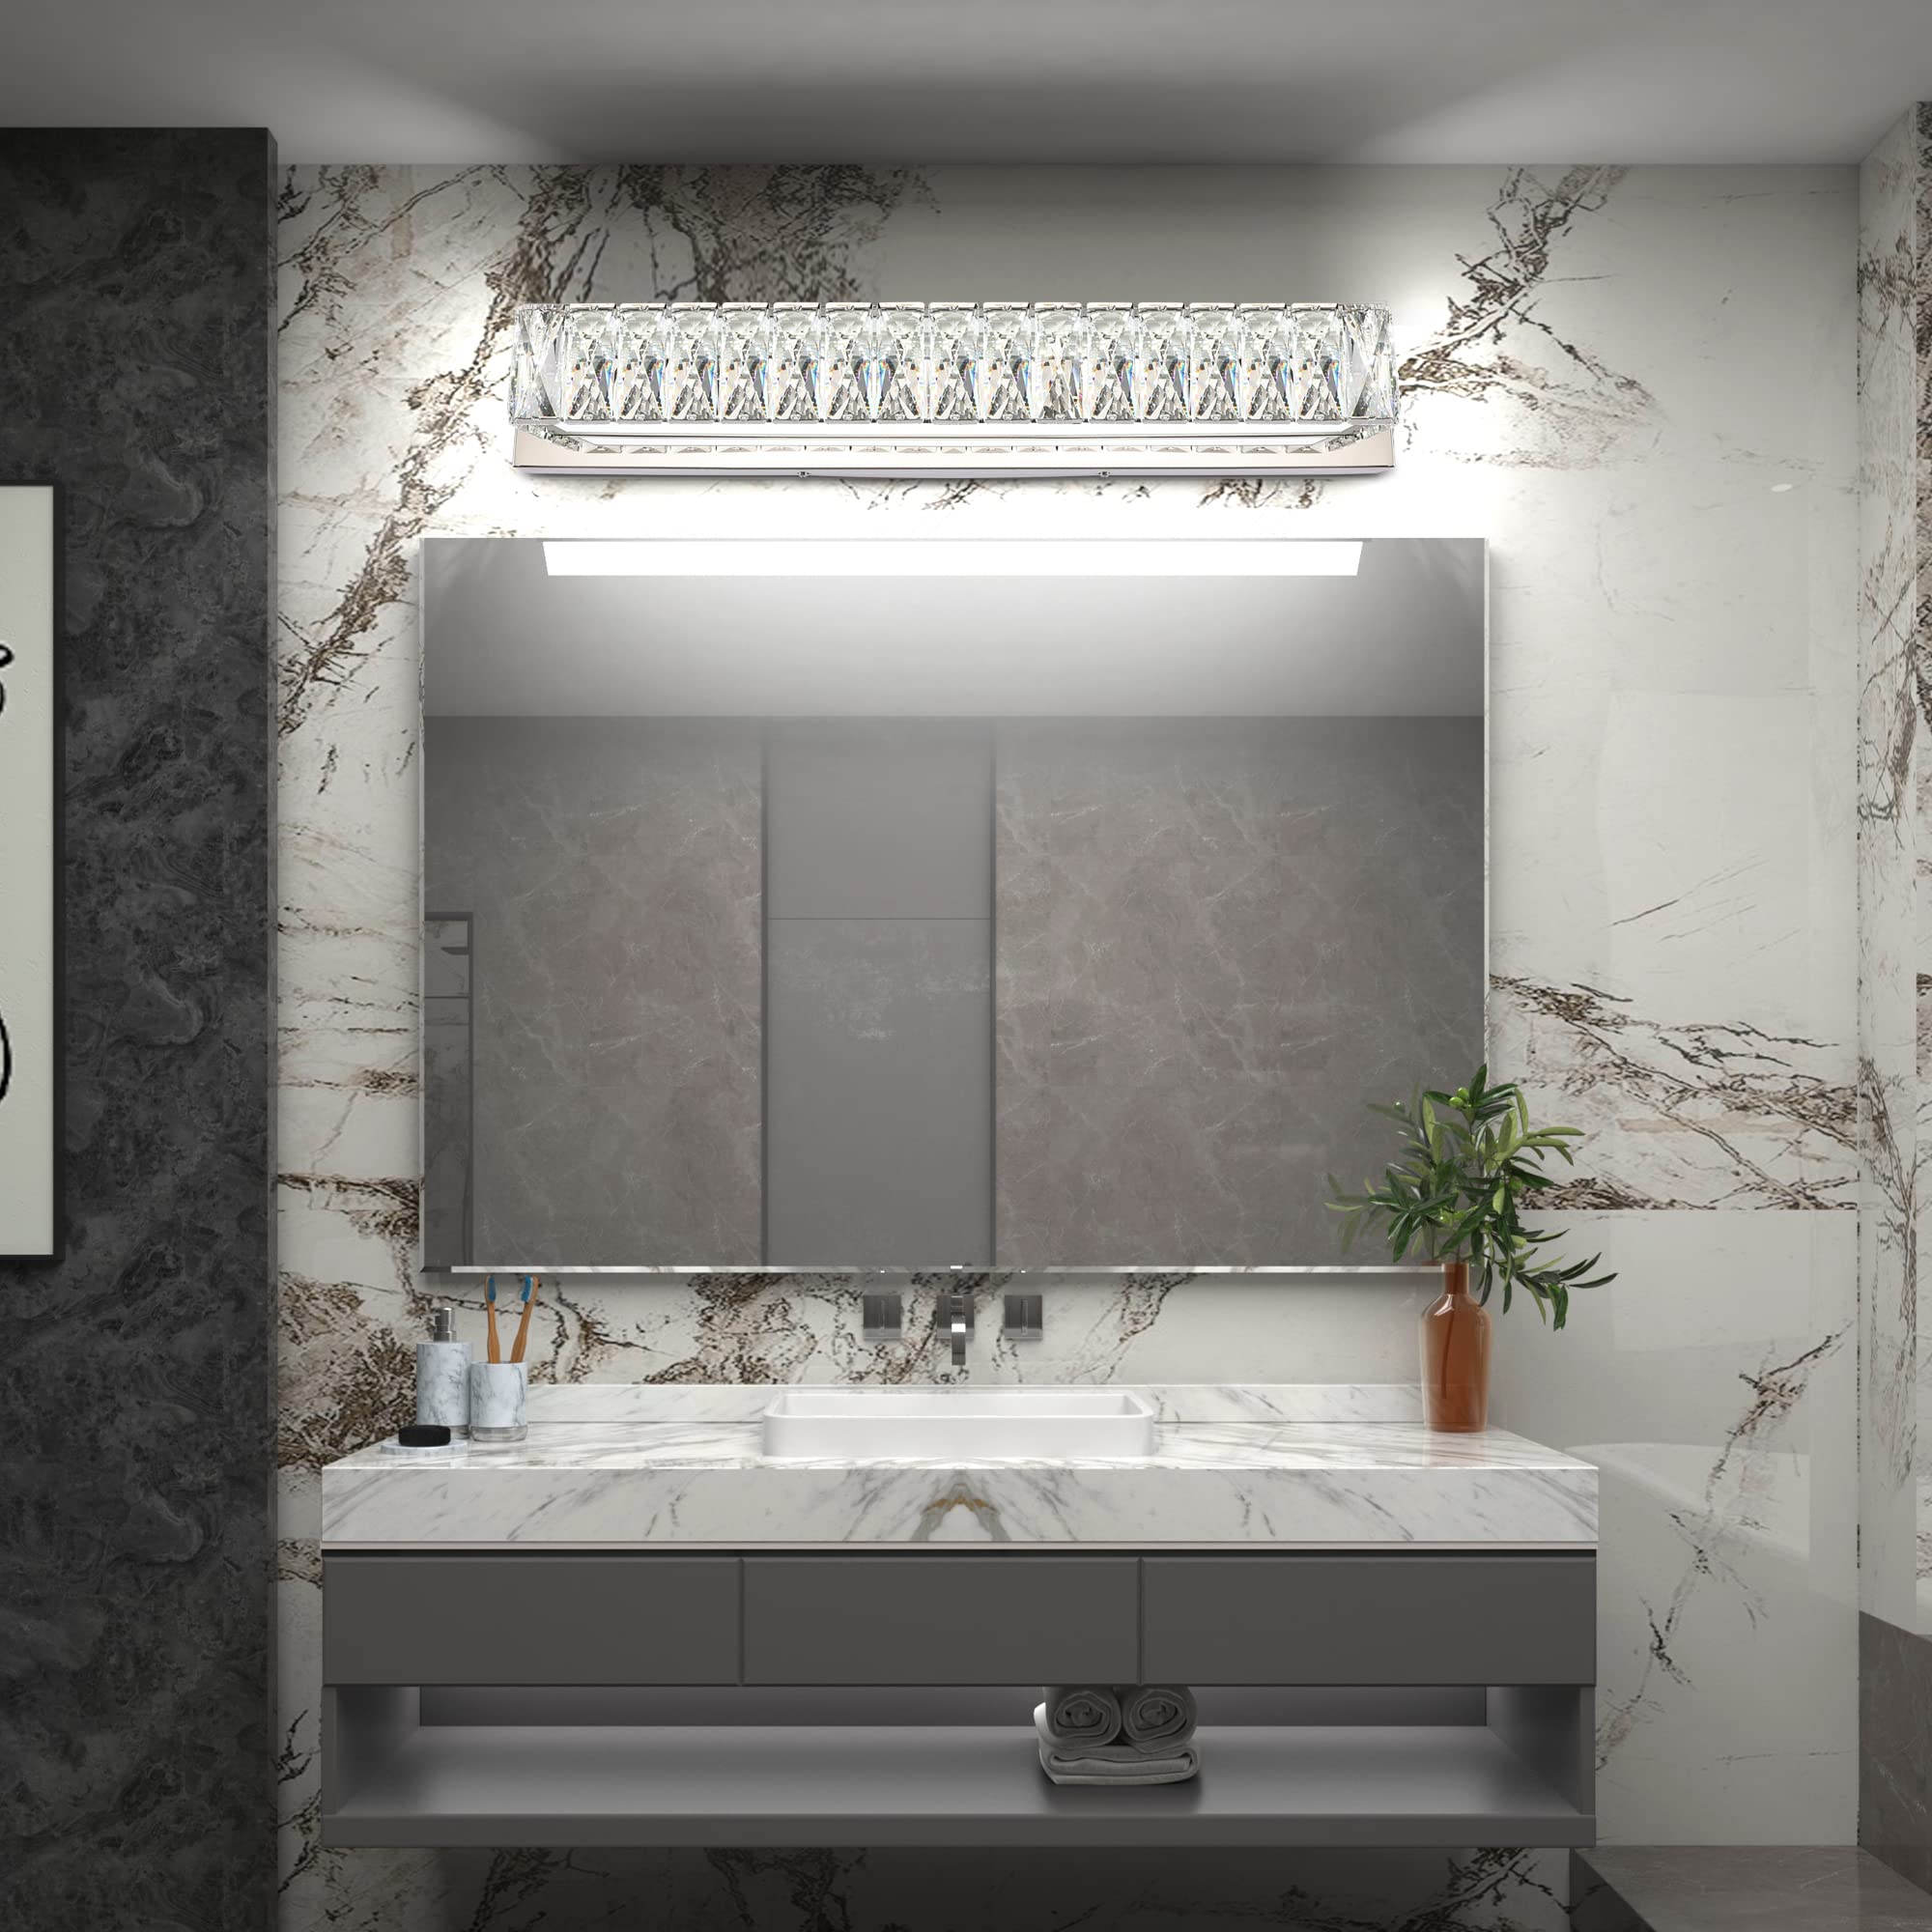 ZUZITO 30 inch LED Bathroom Crystal Vanity Lighting Fixtures Over Mirror Modern Bath Bar Lights Lamp White Light